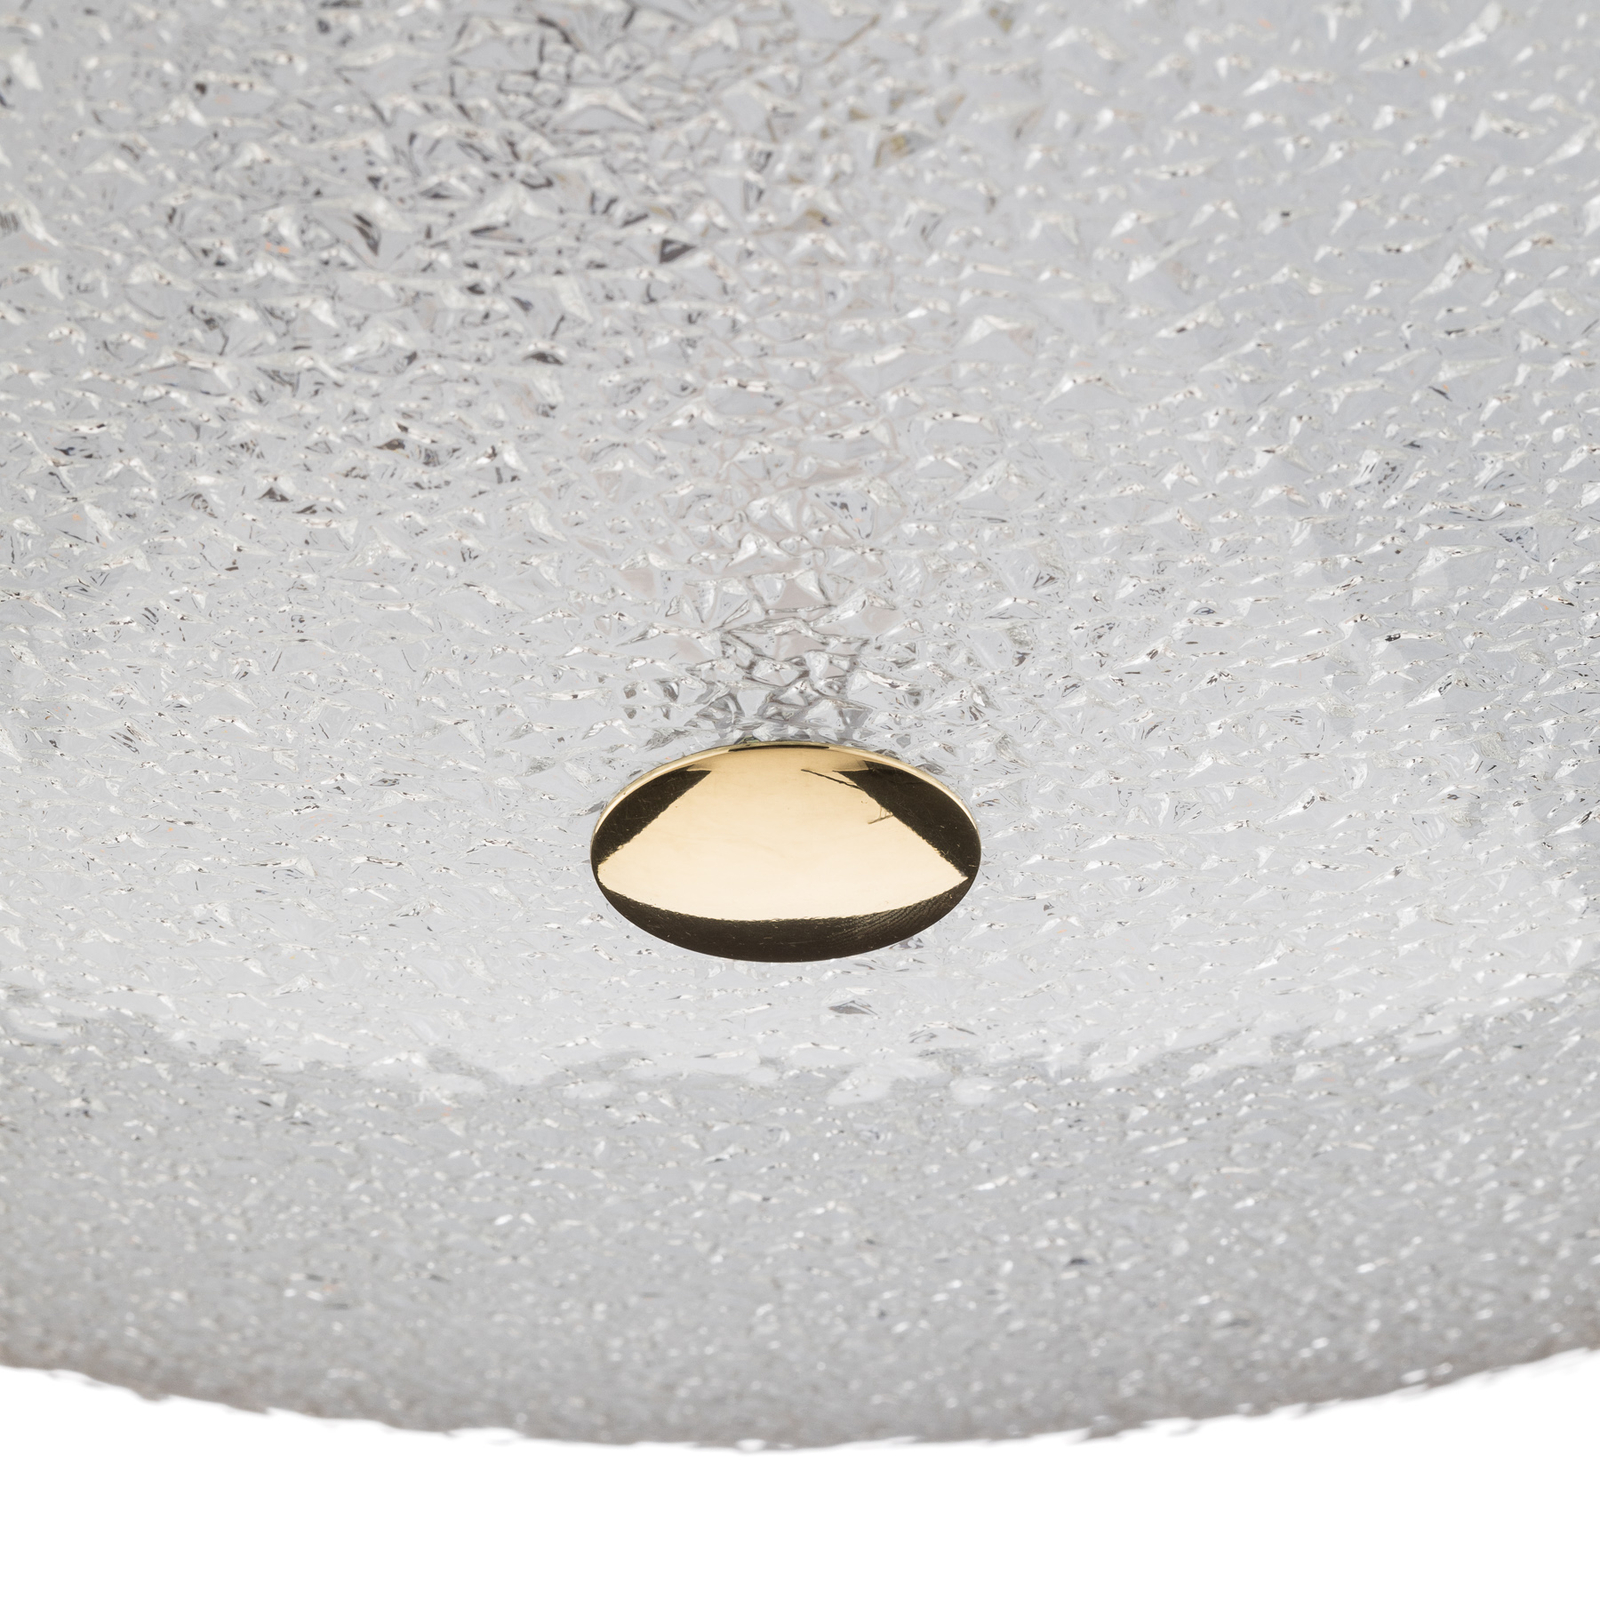 BANKAMP Classic LED ceiling light, Ø 42 cm